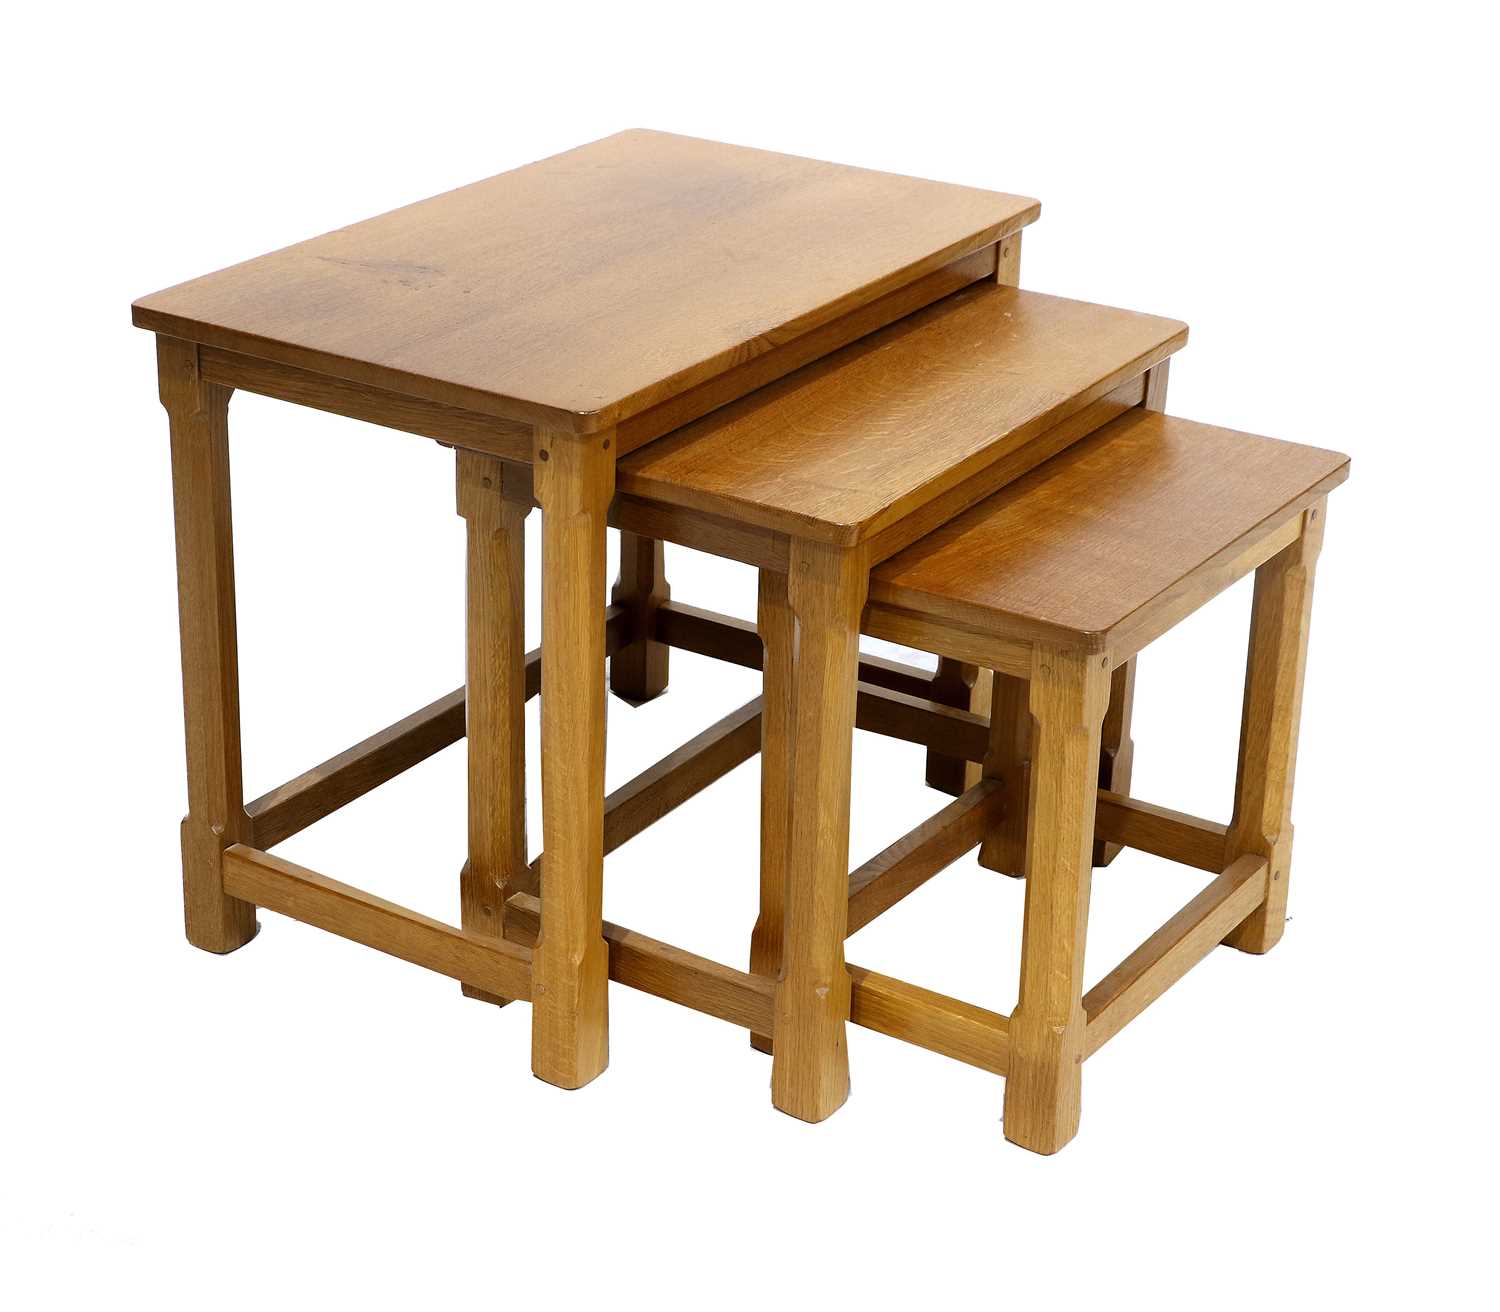 Yorkshire School: An English Oak Nest of Three Tables, flat rectangular tops, on four octagonal legs